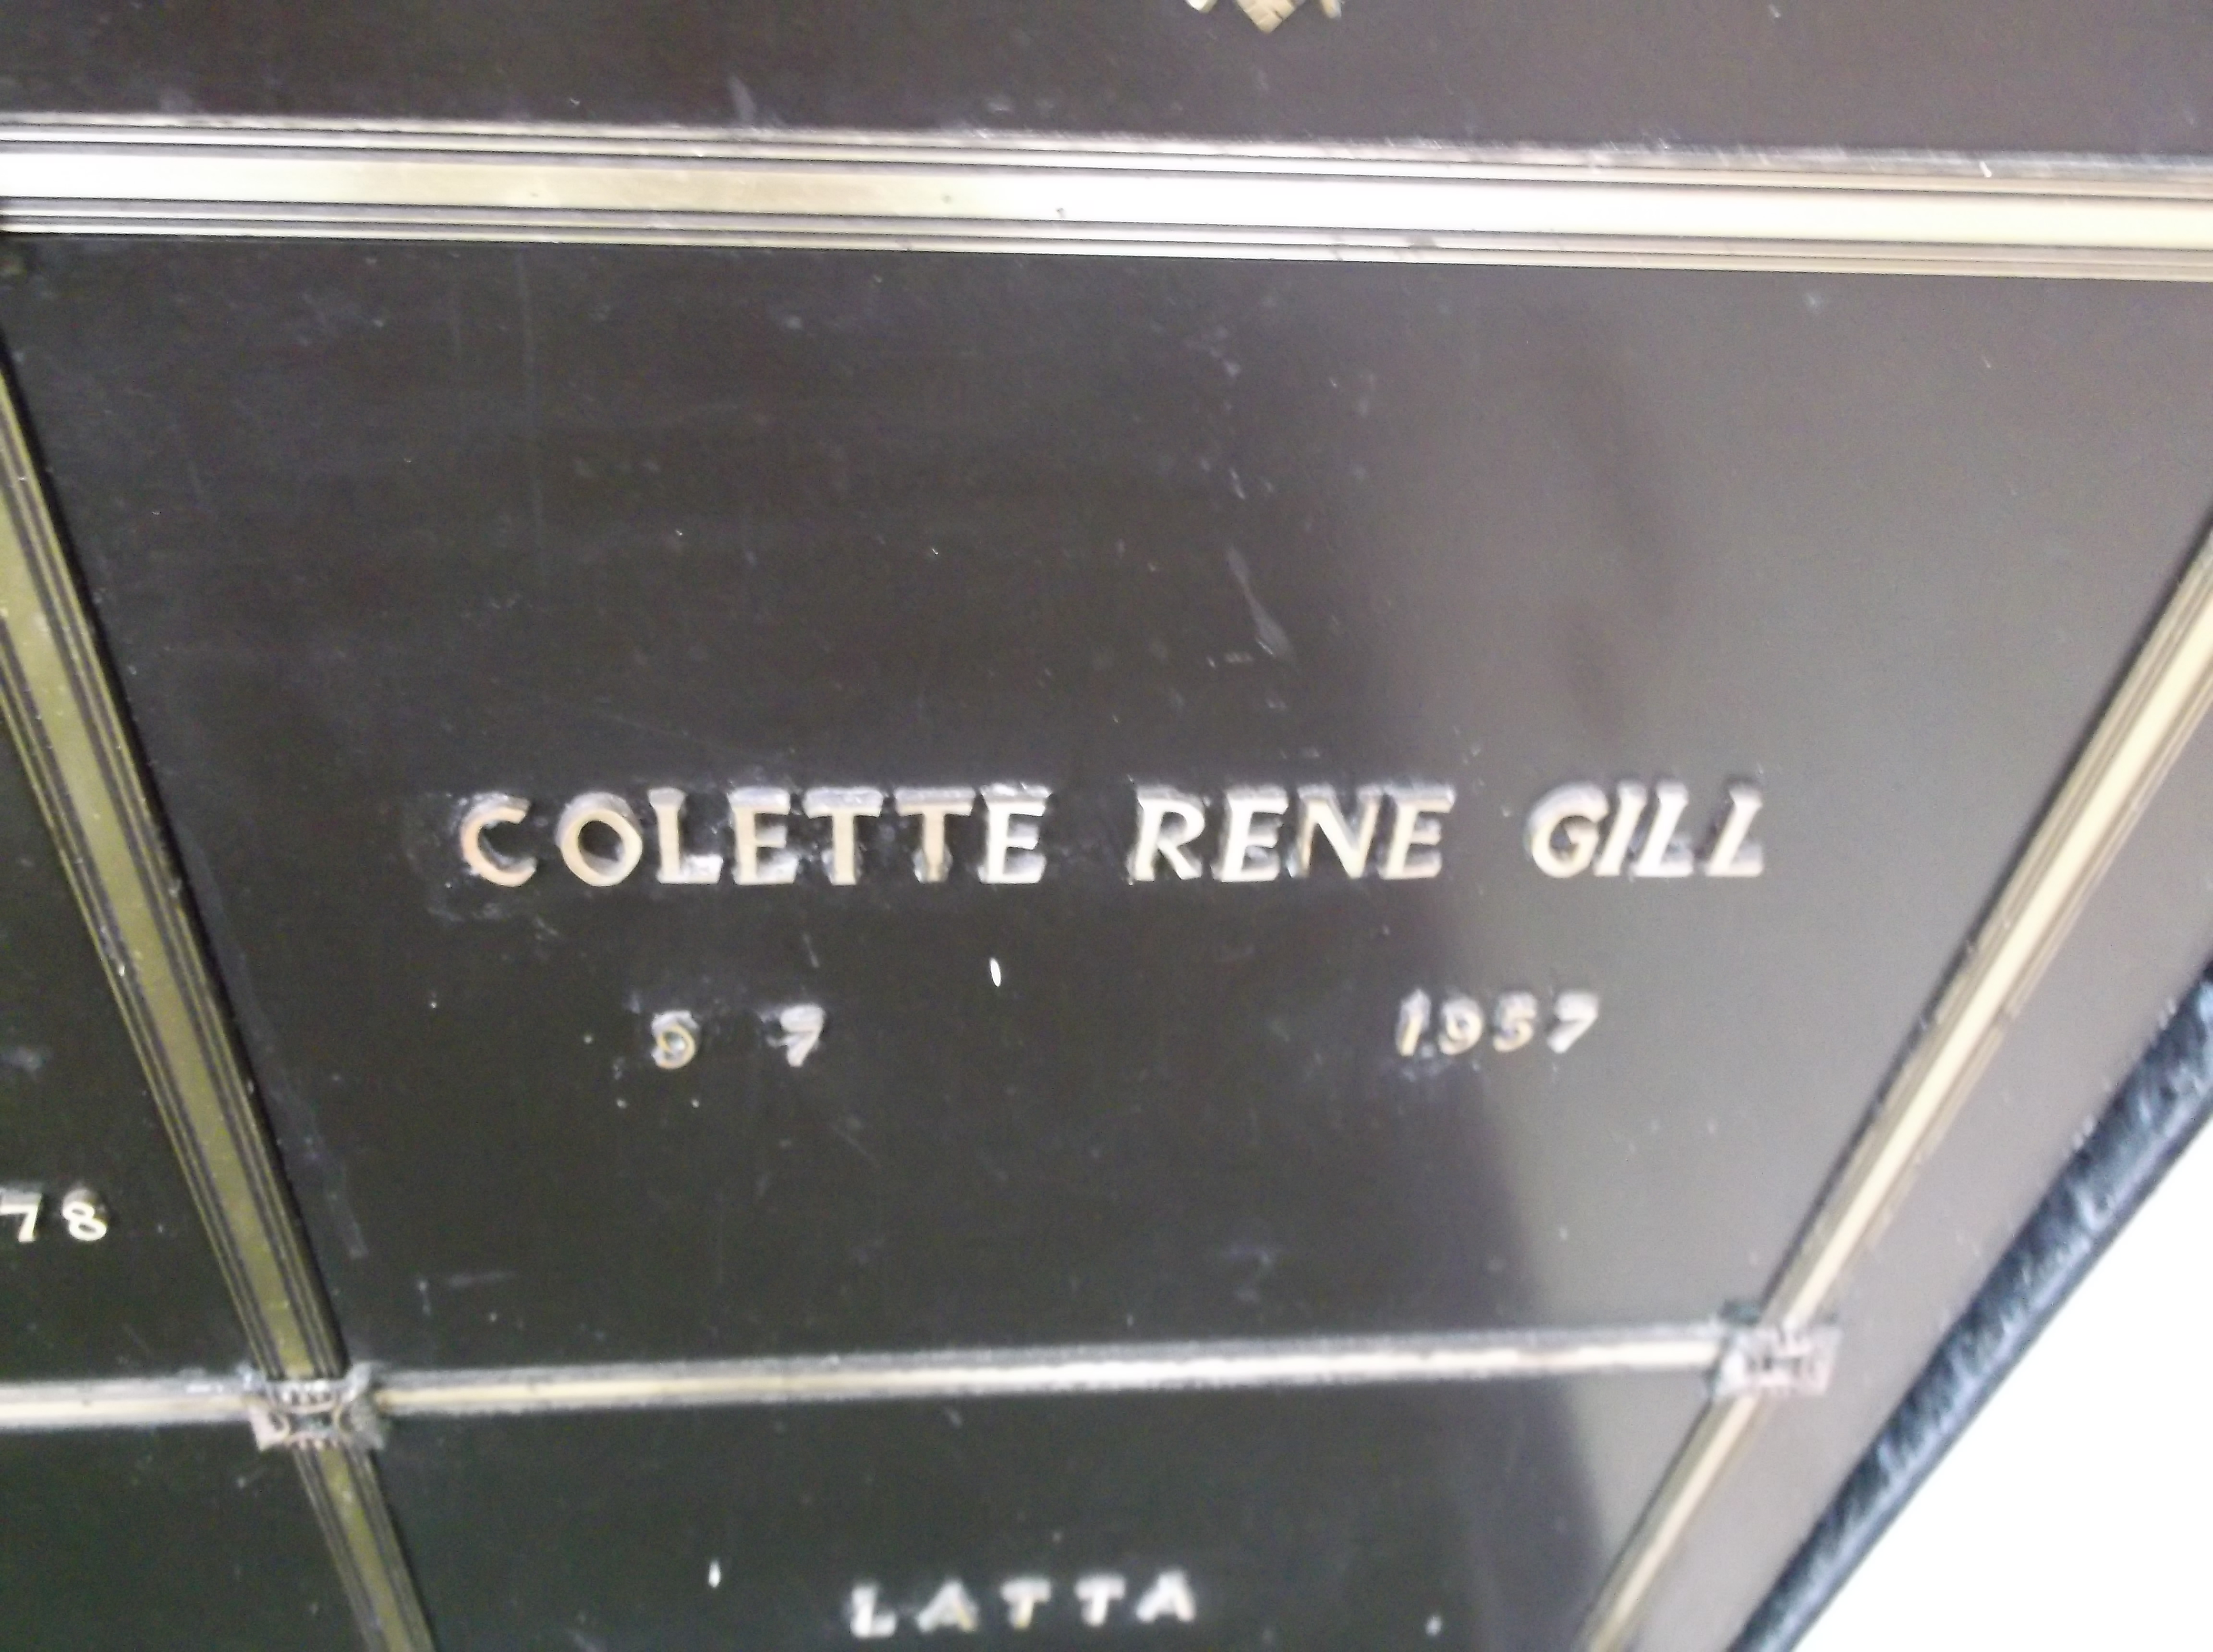 Colette Rene Gill